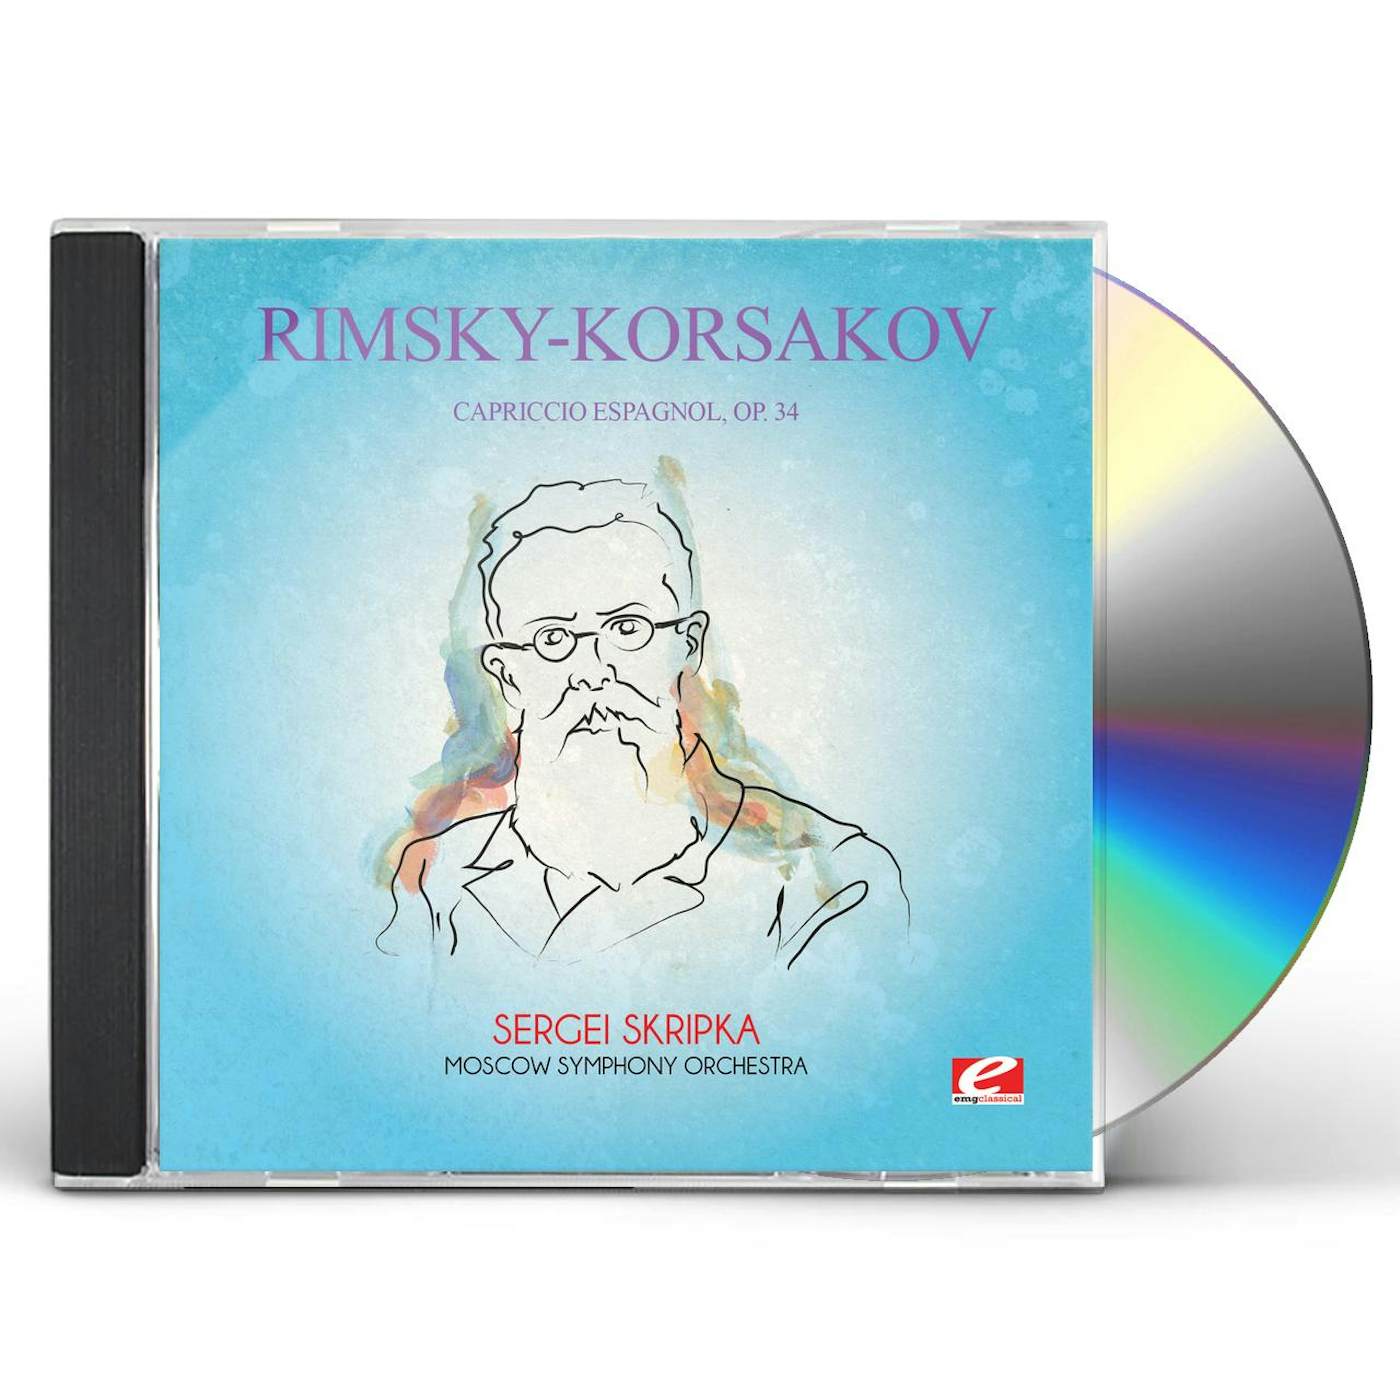 Rimsky-Korsakov CAPRICCIO ESPAGNOL 34 CD